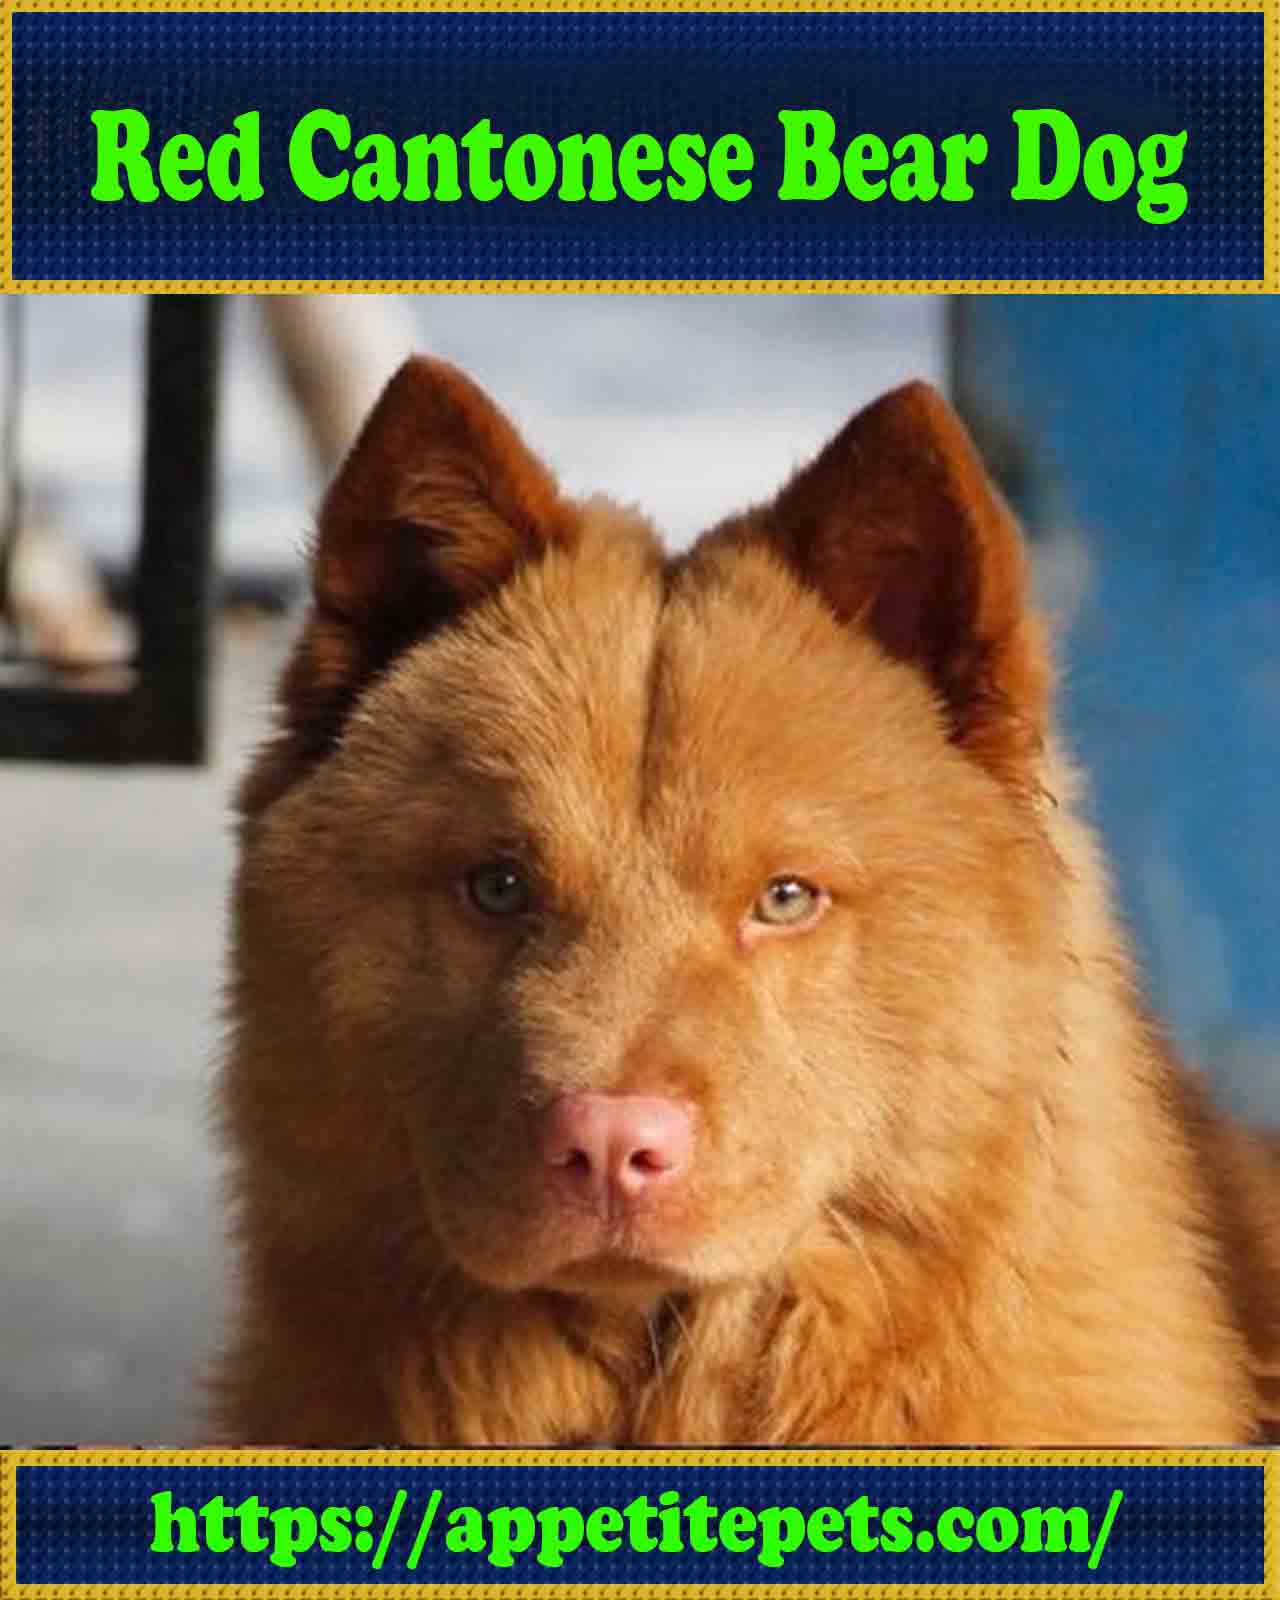 Red-Cantonese-Bear-Dog-